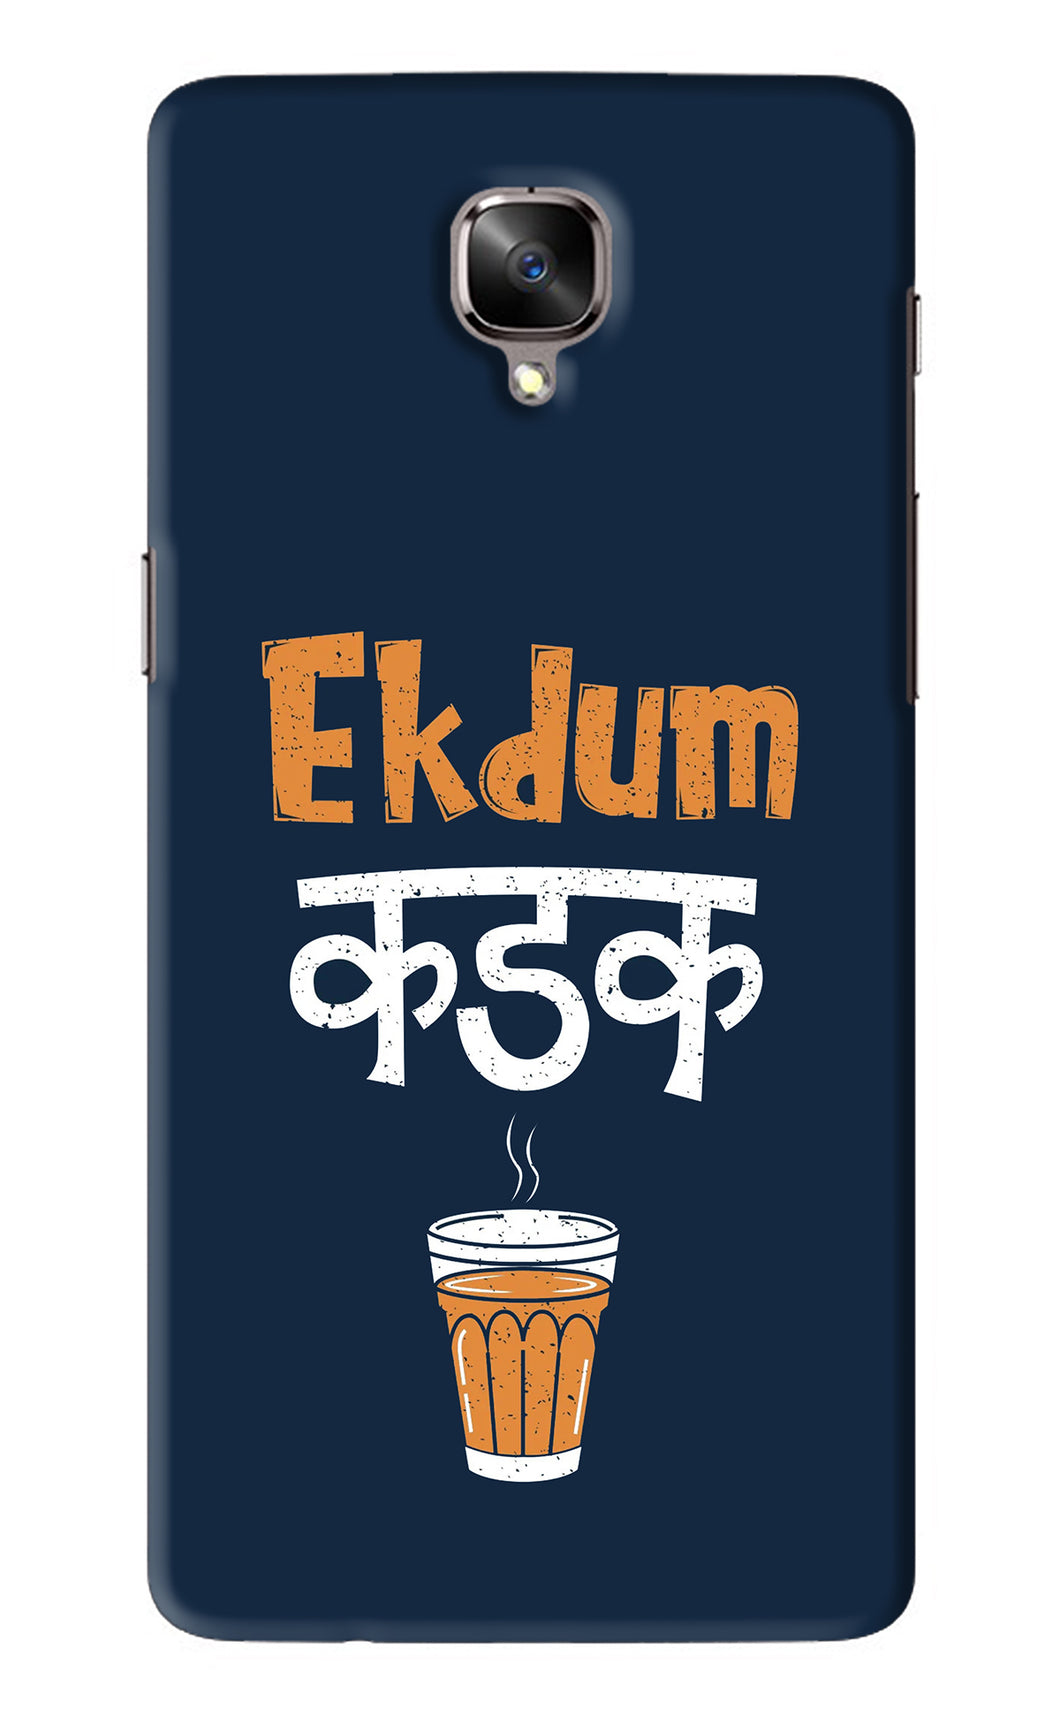 Ekdum Kadak Chai OnePlus 3 Back Skin Wrap